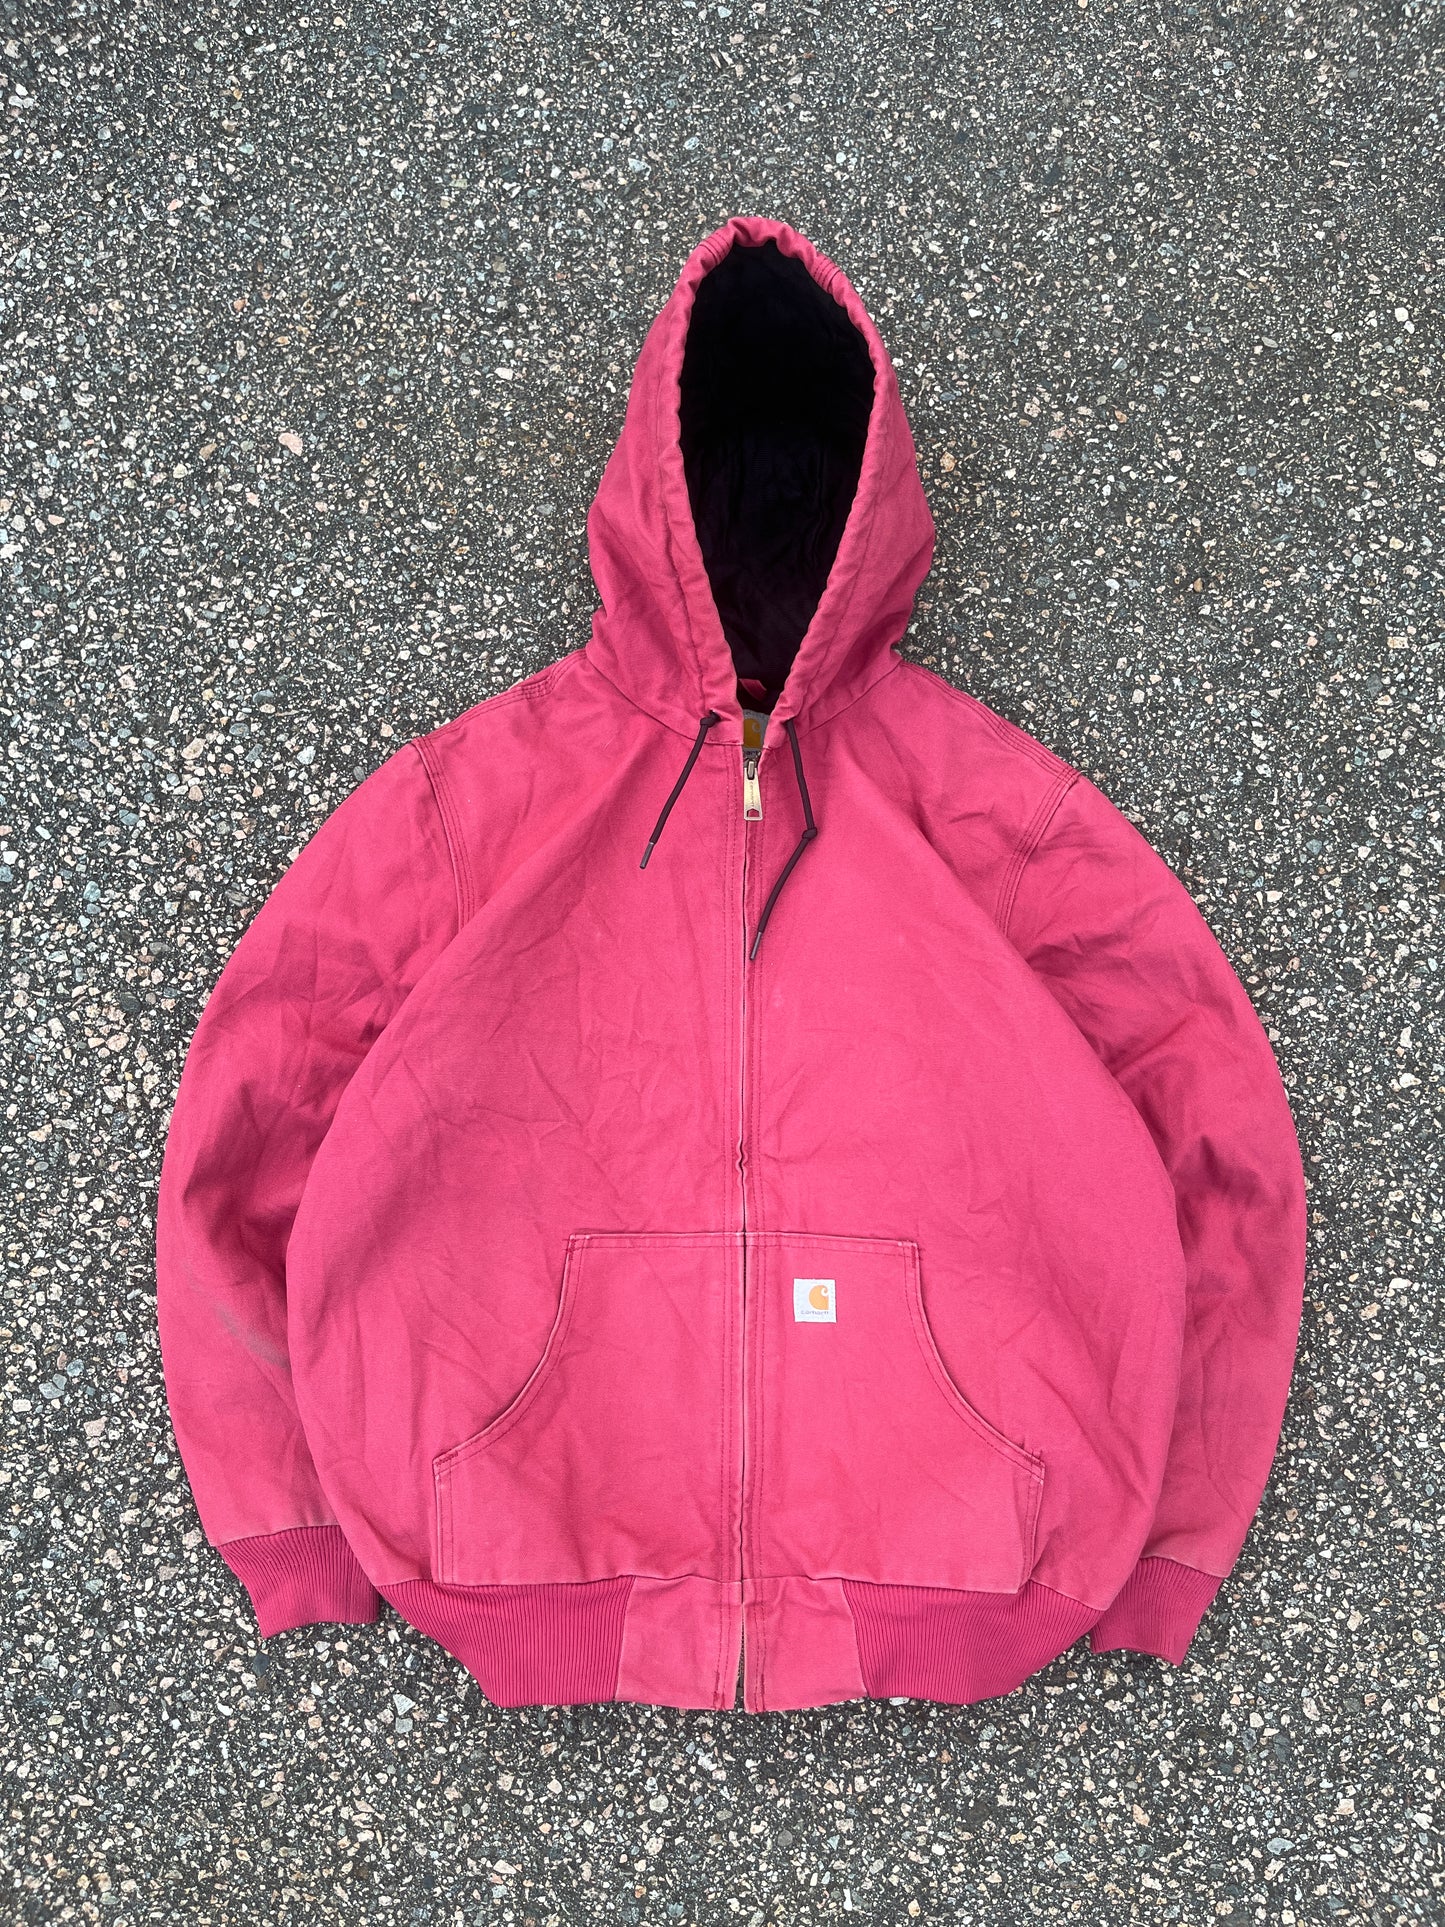 Faded Pink Carhartt Active Jacket - Medium